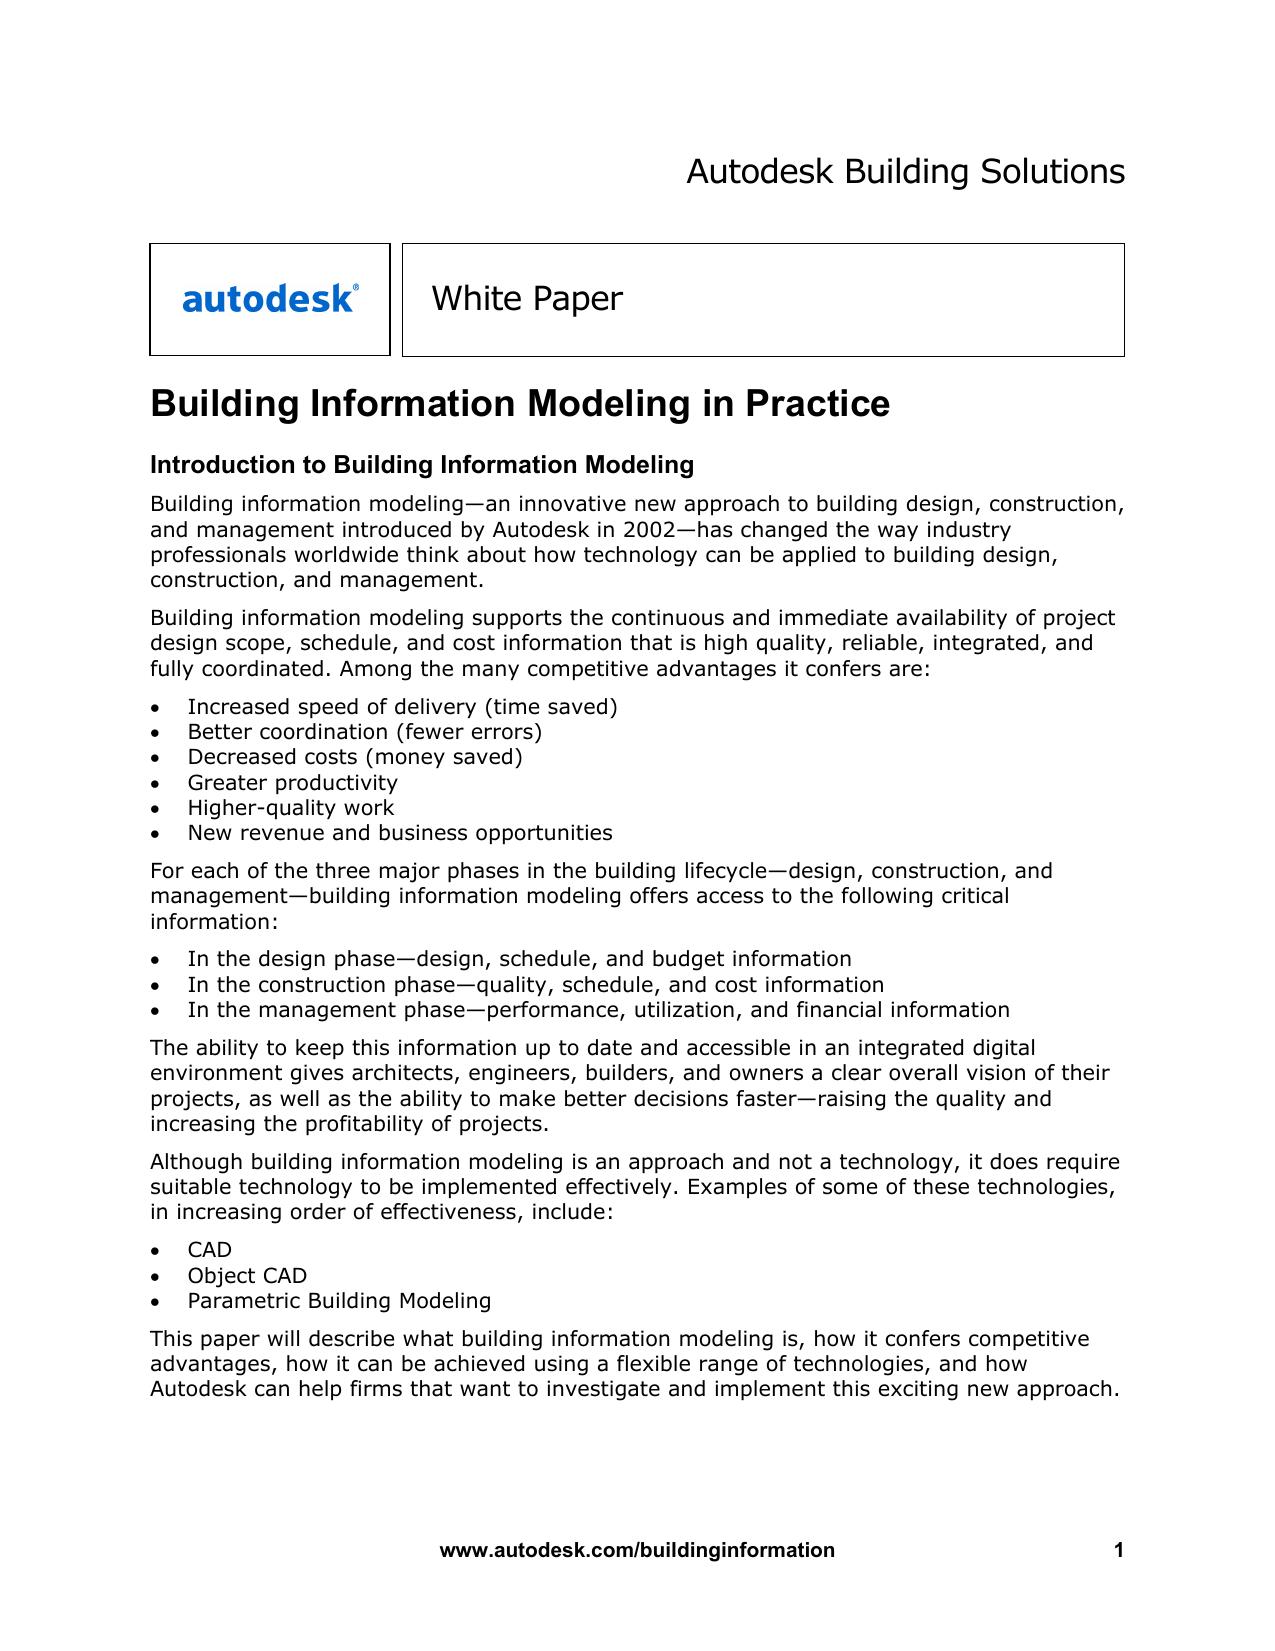 Building Information Modeling in Practice